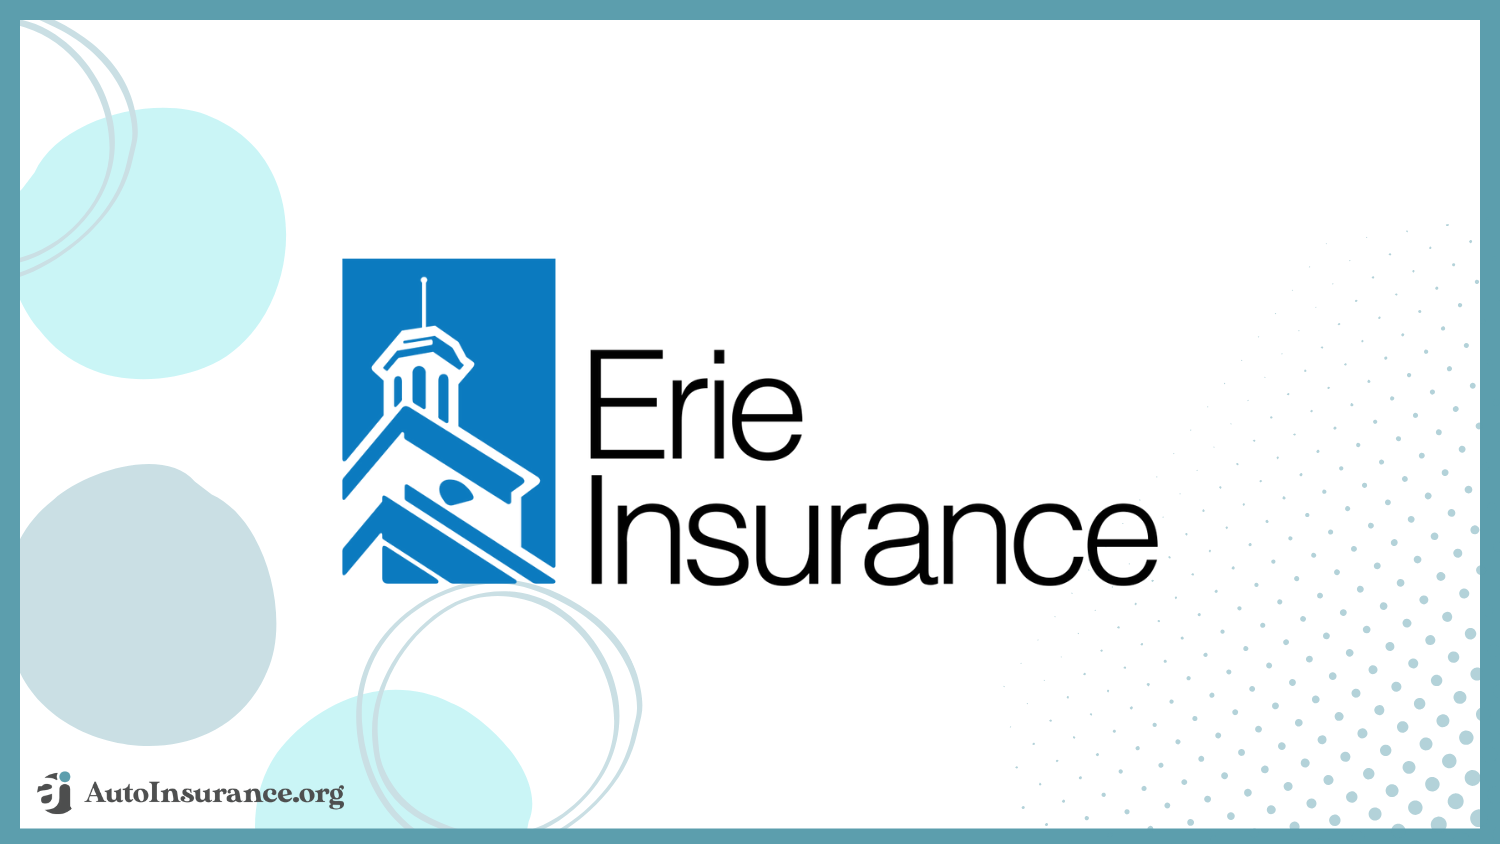 Best 3-Month Auto Insurance: Erie